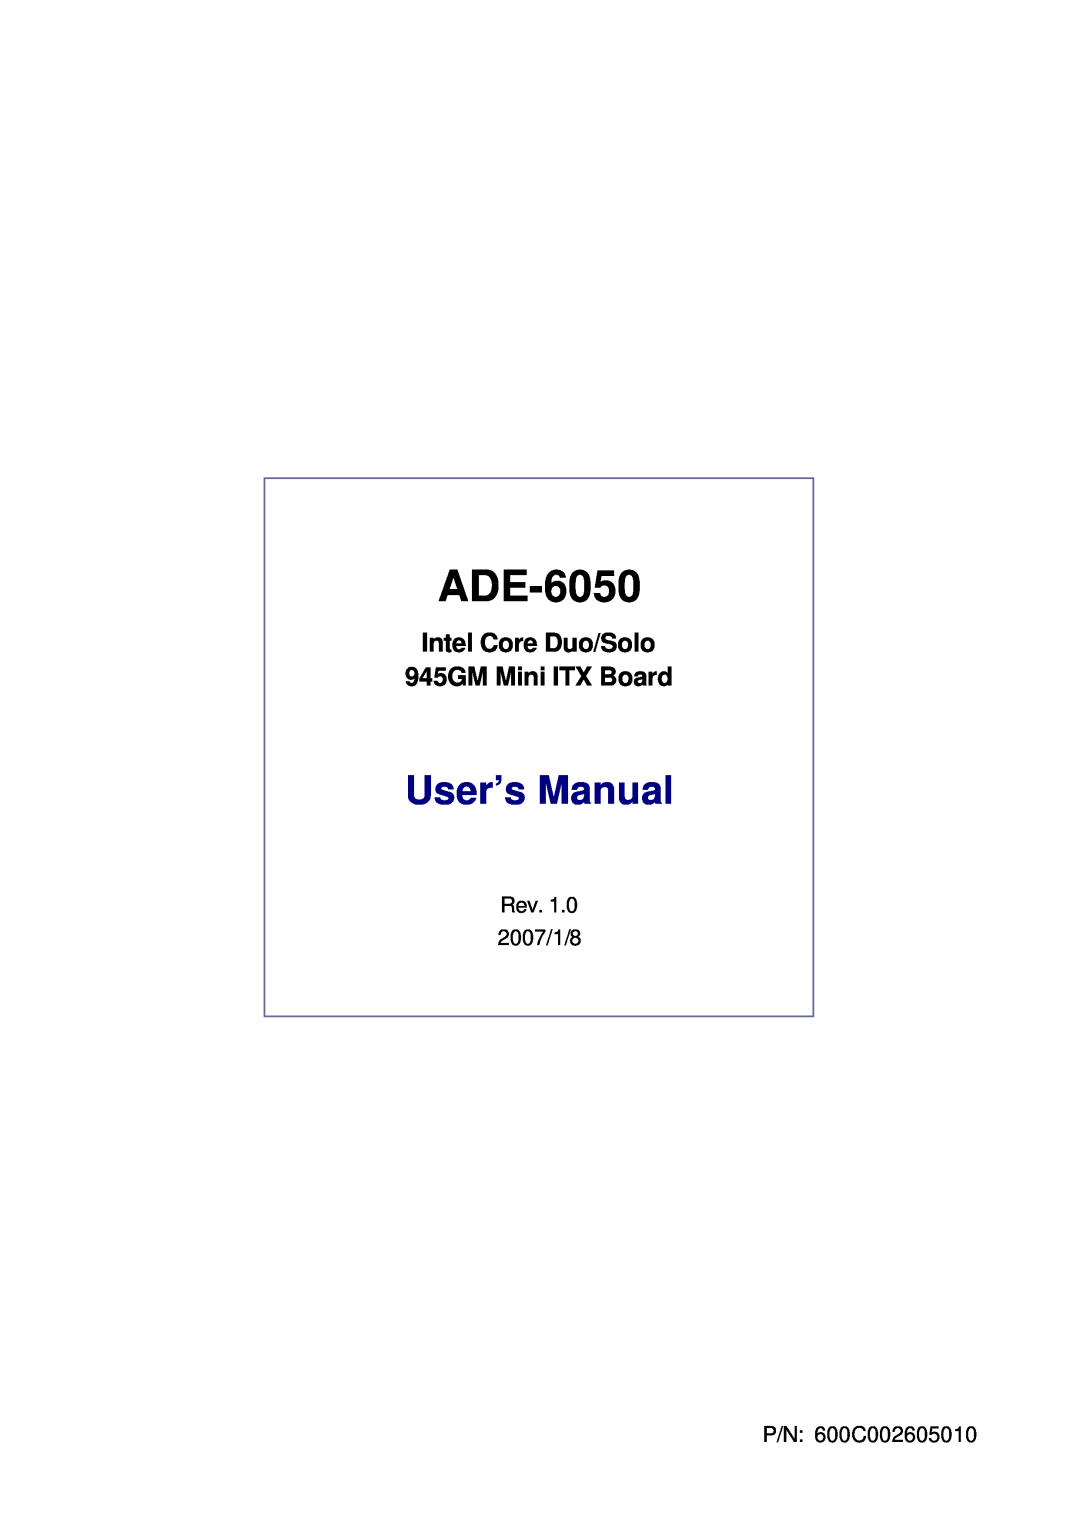 Intel user manual ADE-6050, Intel Core Duo/Solo 945GM Mini ITX Board 